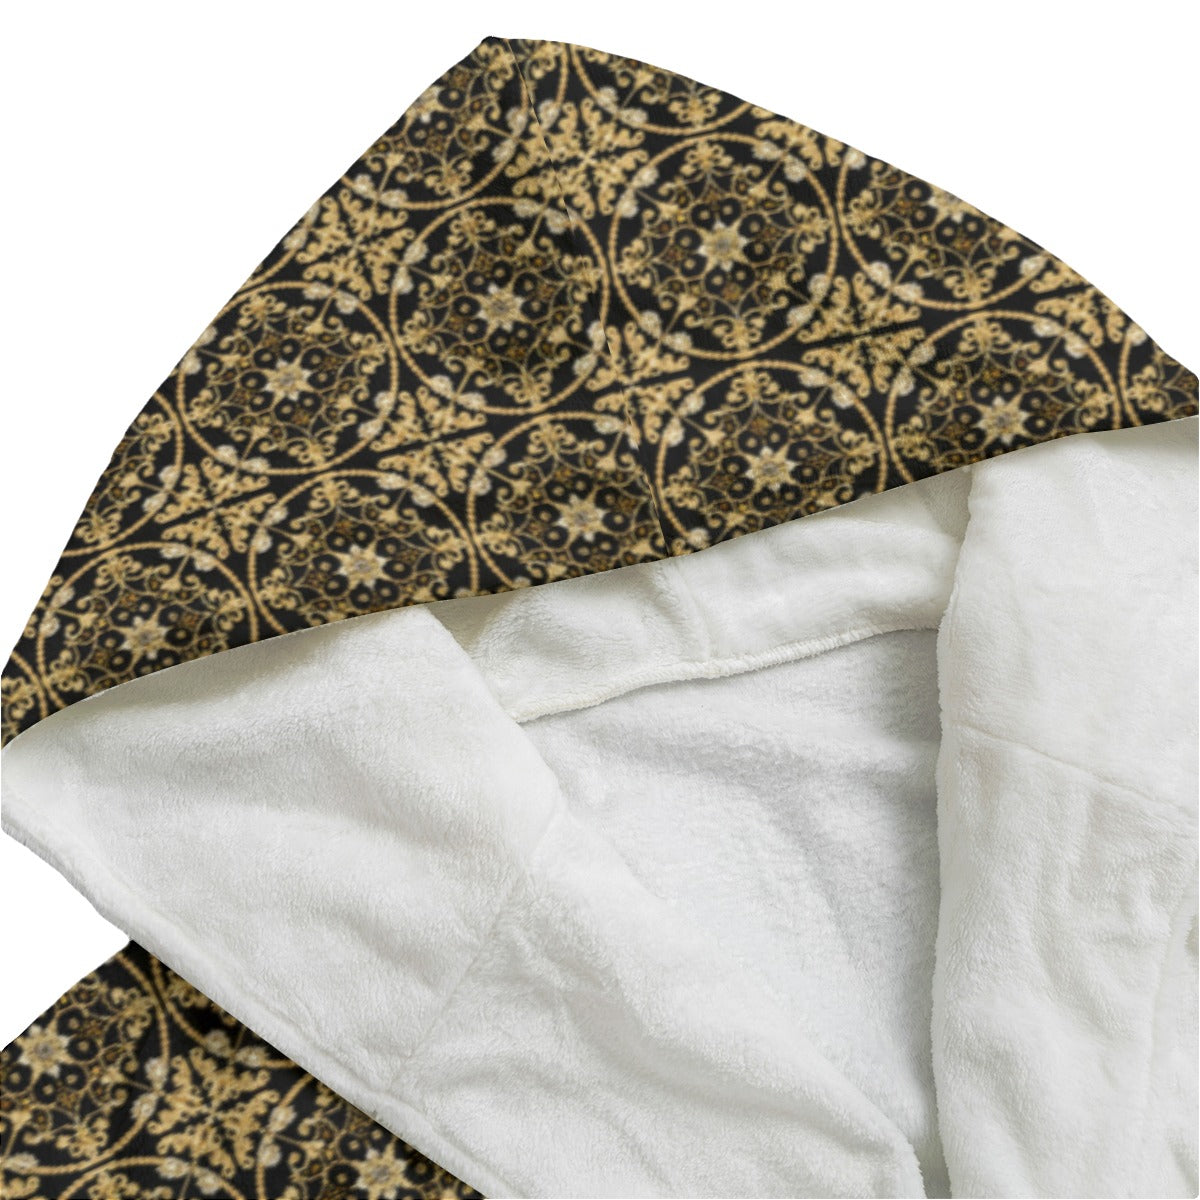 AC BAROQUE 'CHARLOTTE" All-Over Print Unisex Flannel Hooded bathrobe